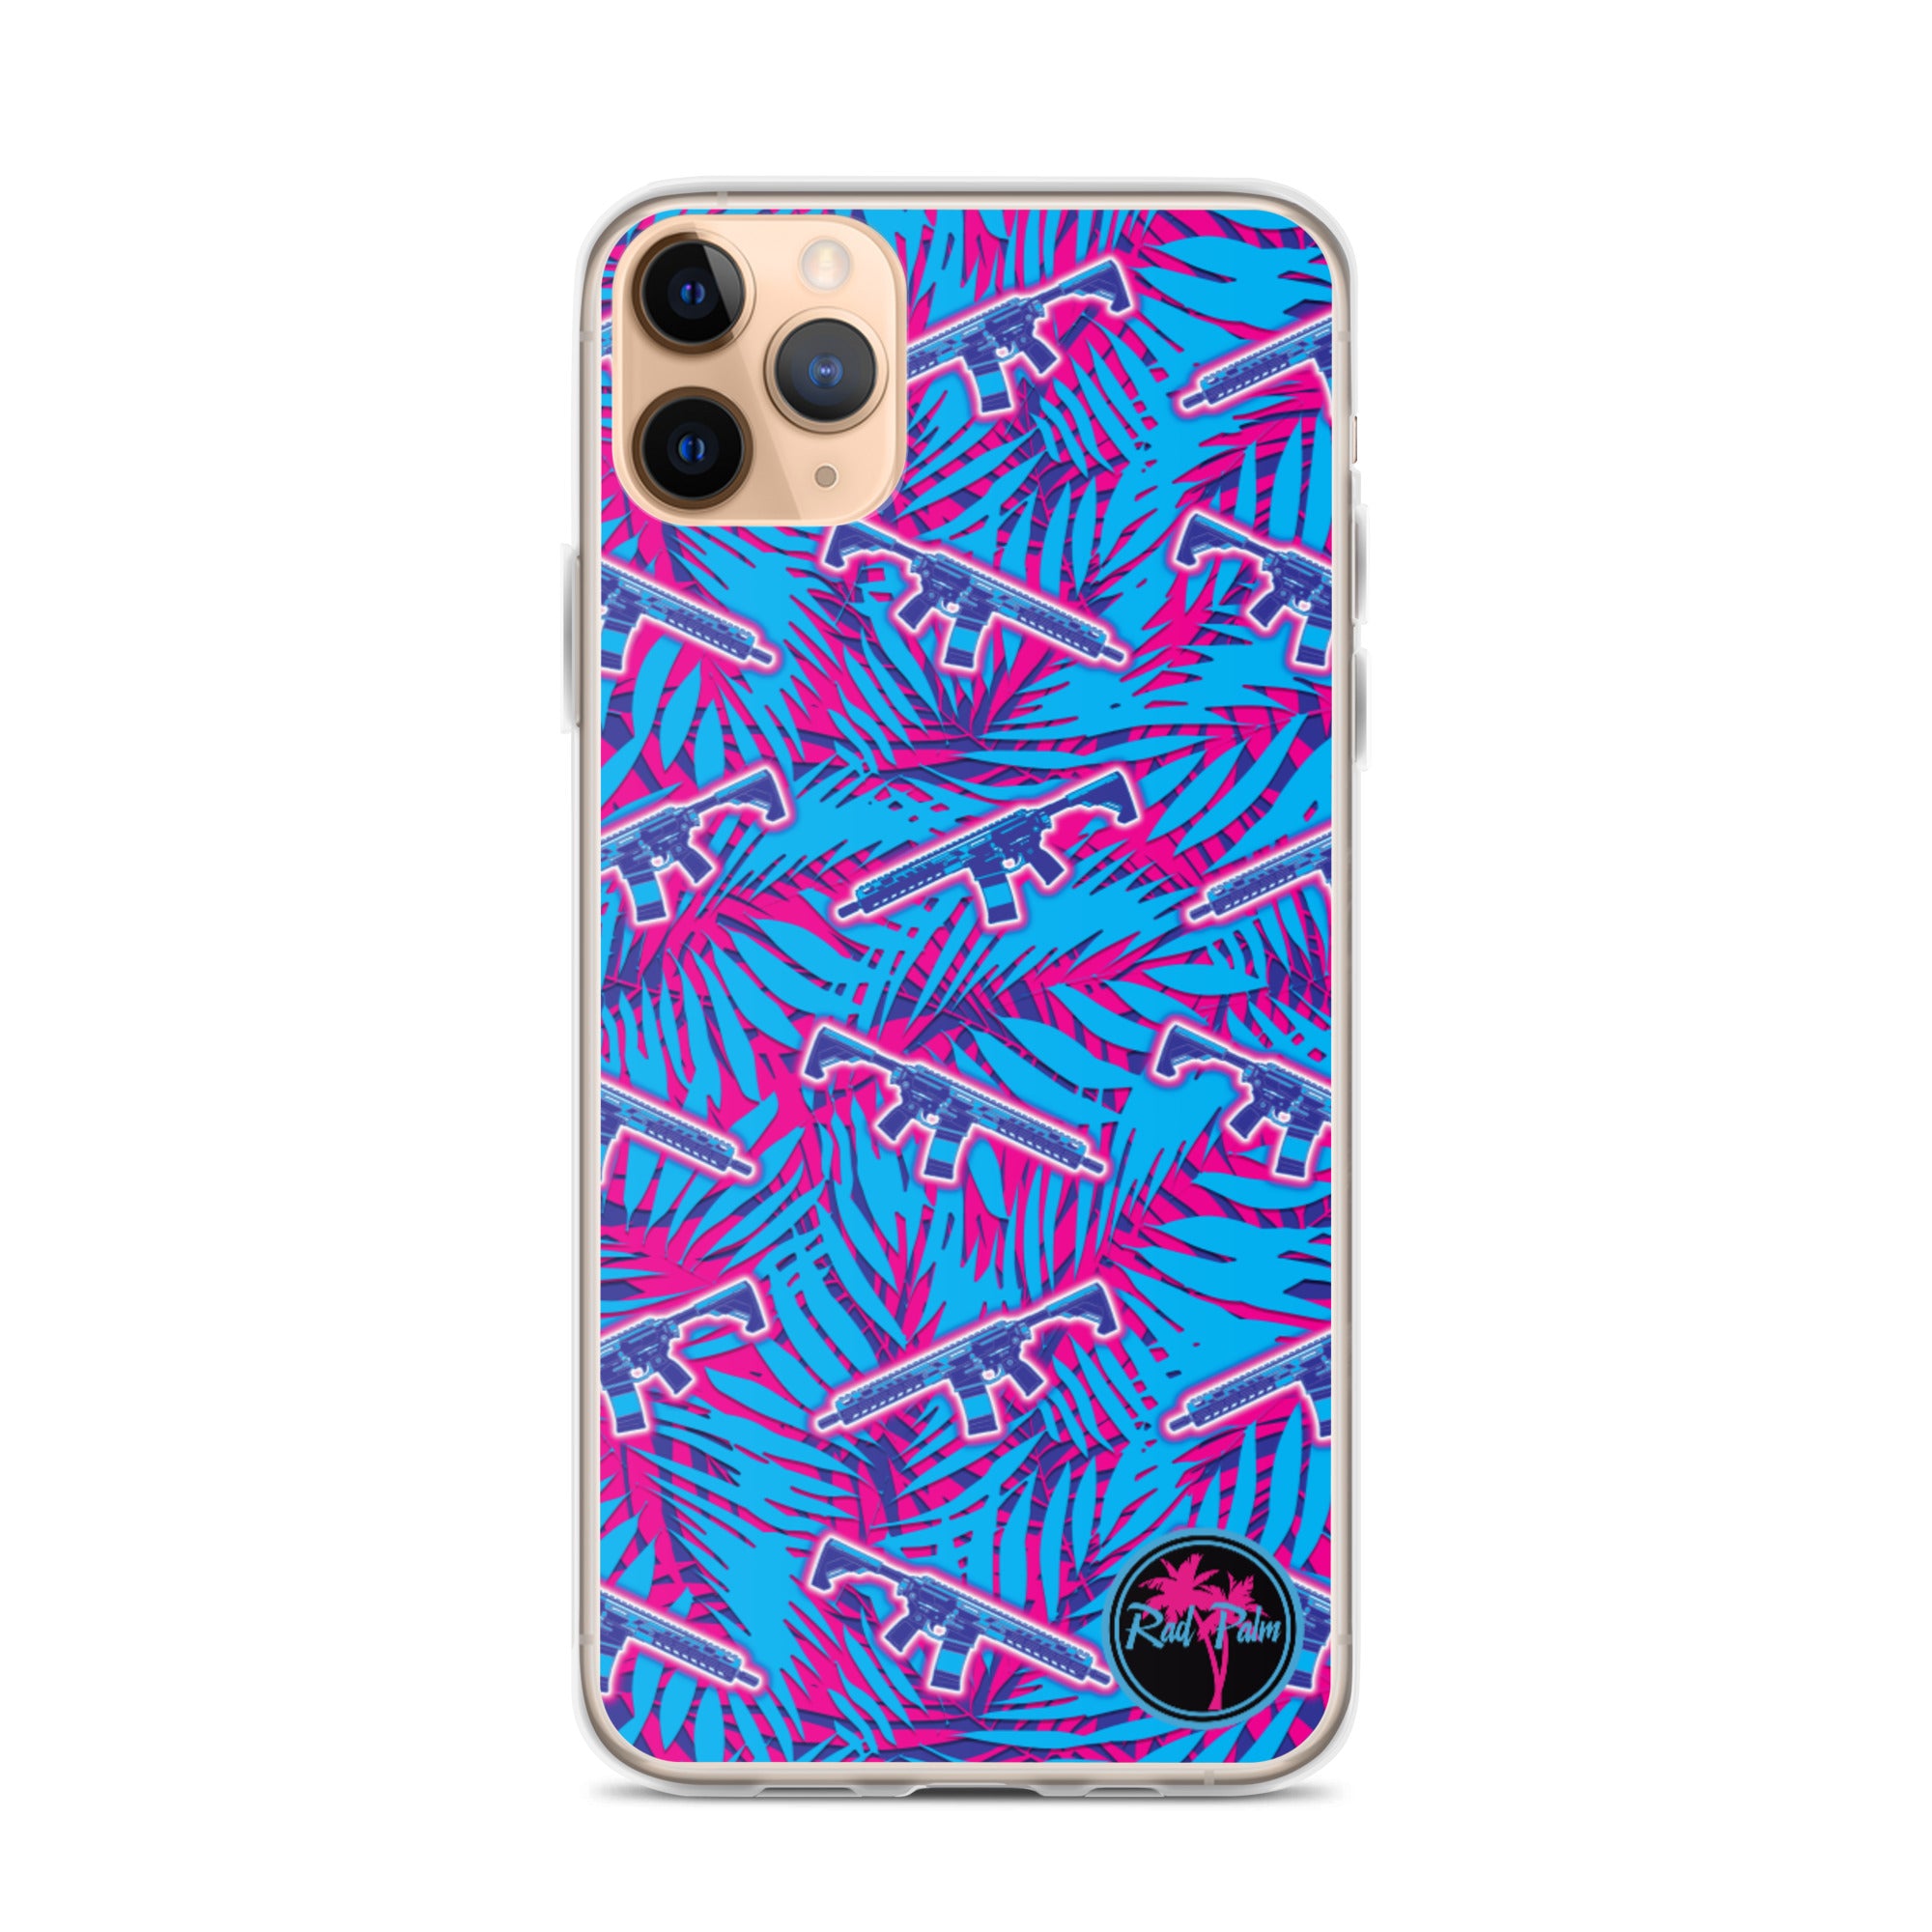 Neon ARs iPhone Case